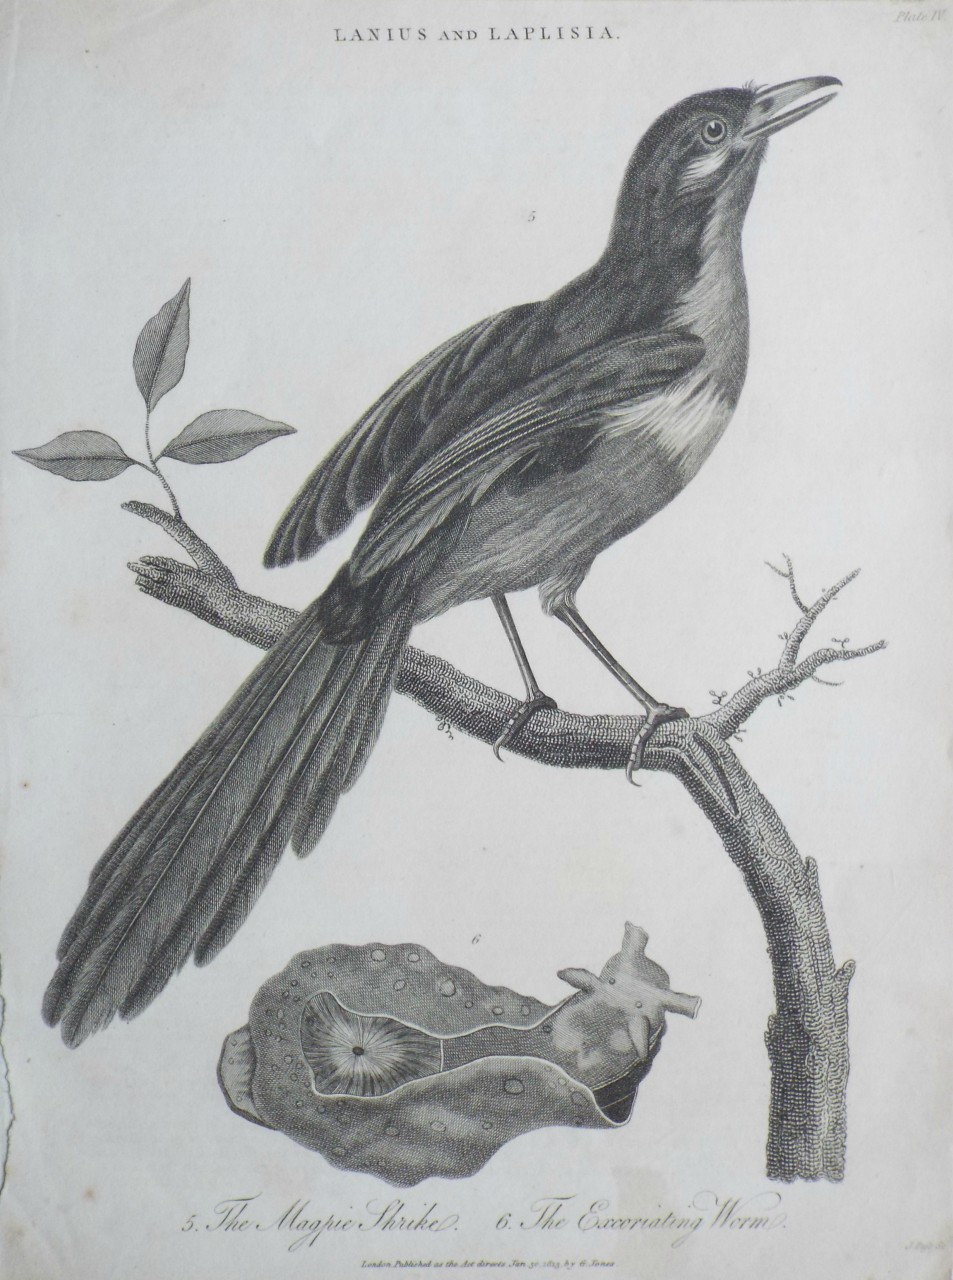 Print - Lanius and Laplisia. 5. The Magpie Shrike. 6. The Excoriating Worm. - Pass